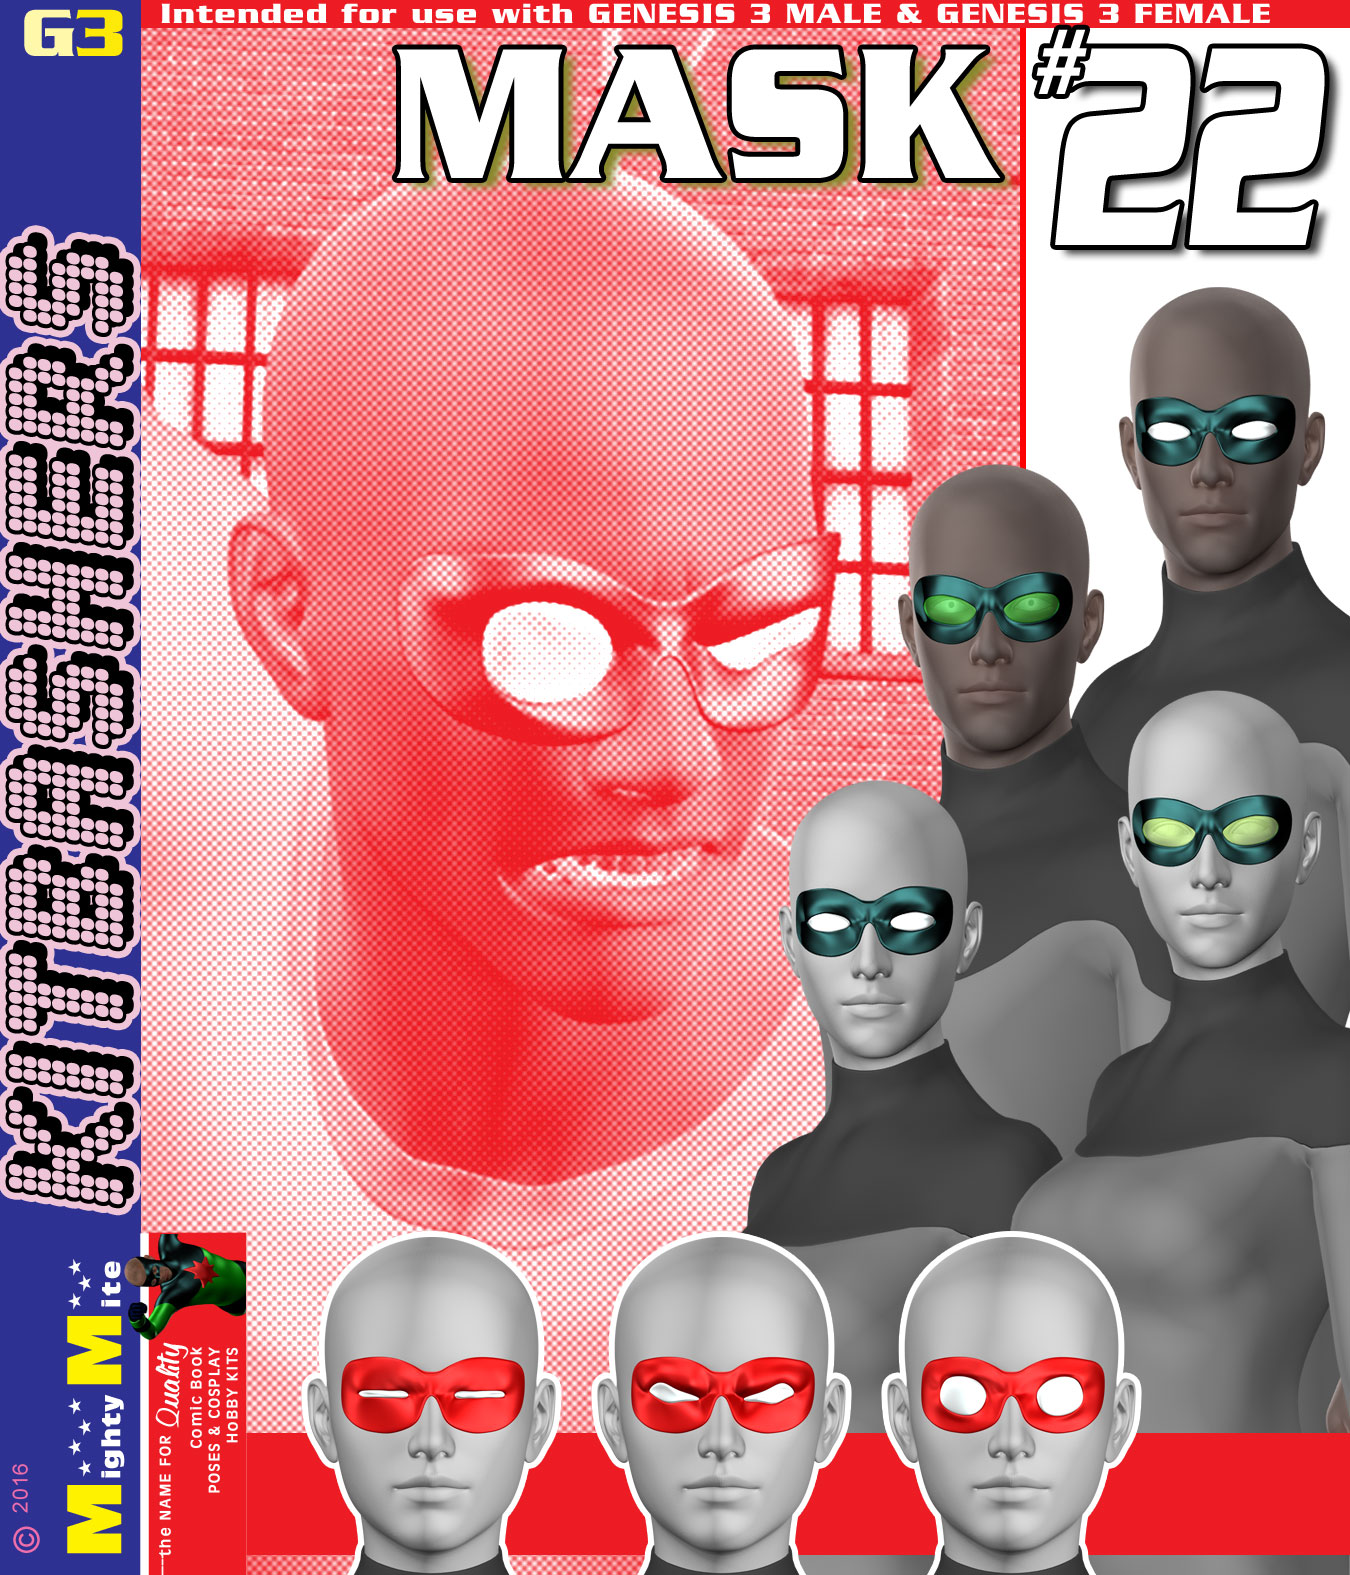 Mask 022 MMKBG3 by: MightyMite, 3D Models by Daz 3D